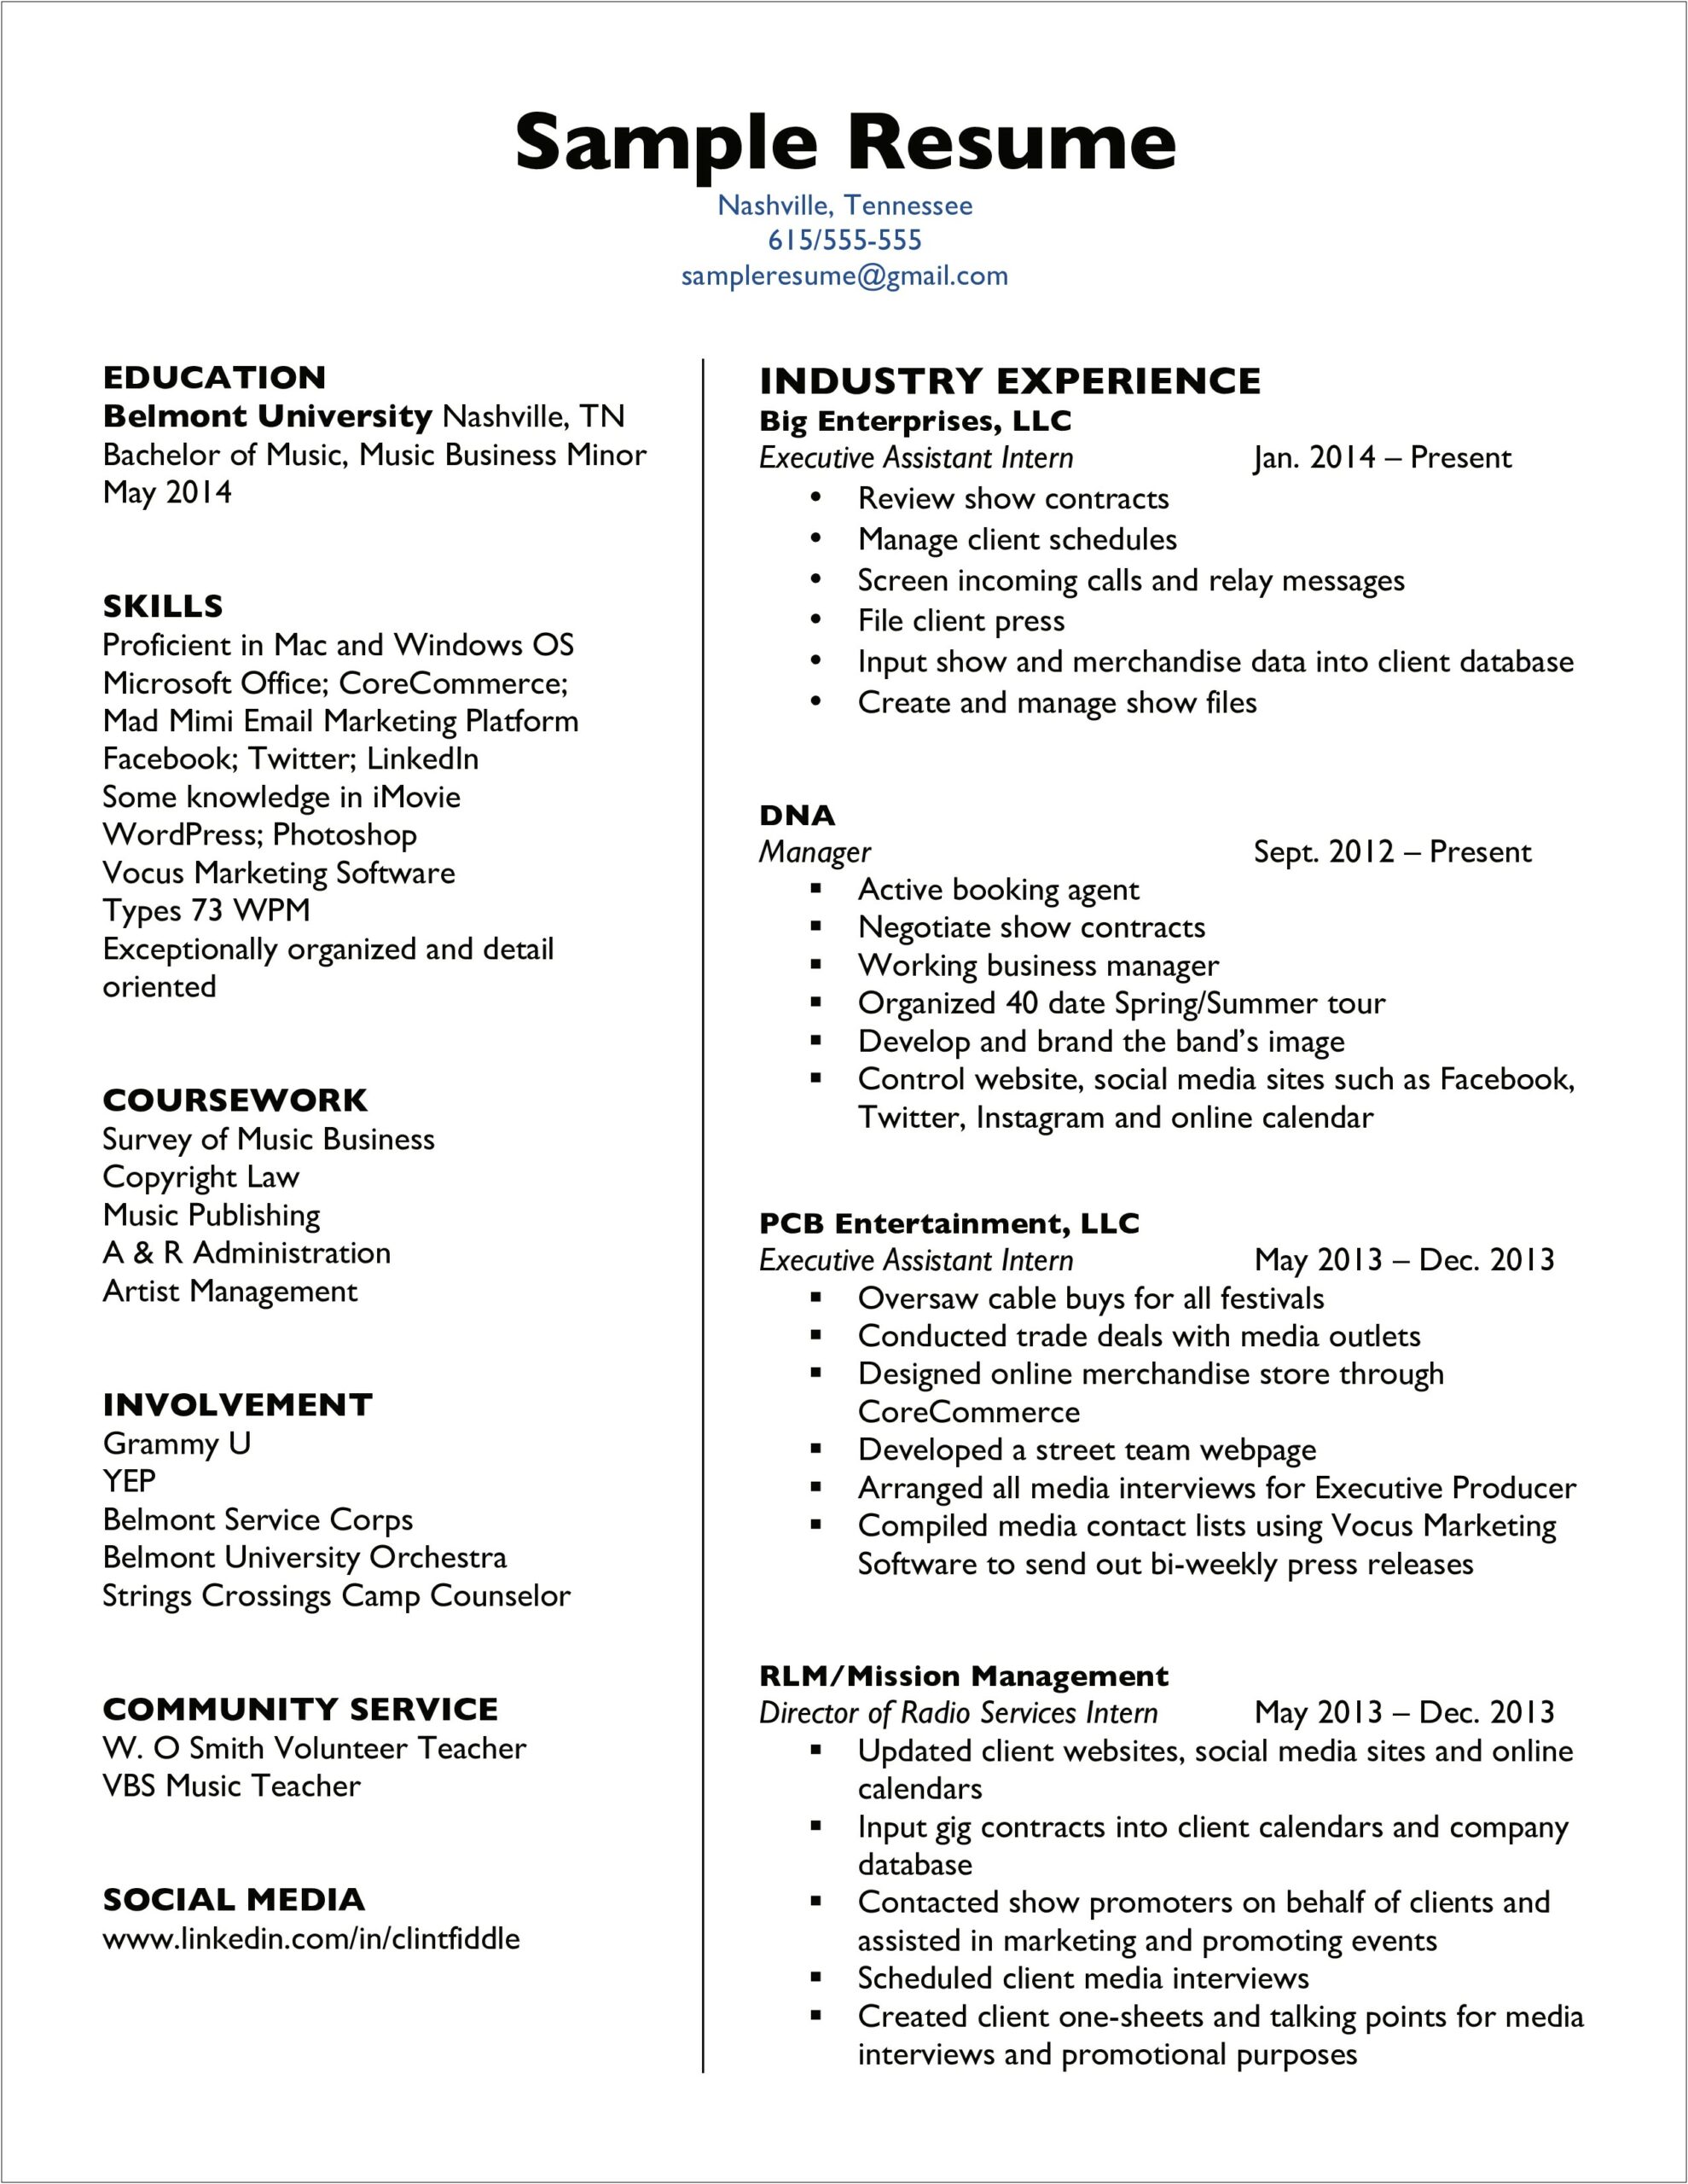 Job Description For Camp Counselor For Resume